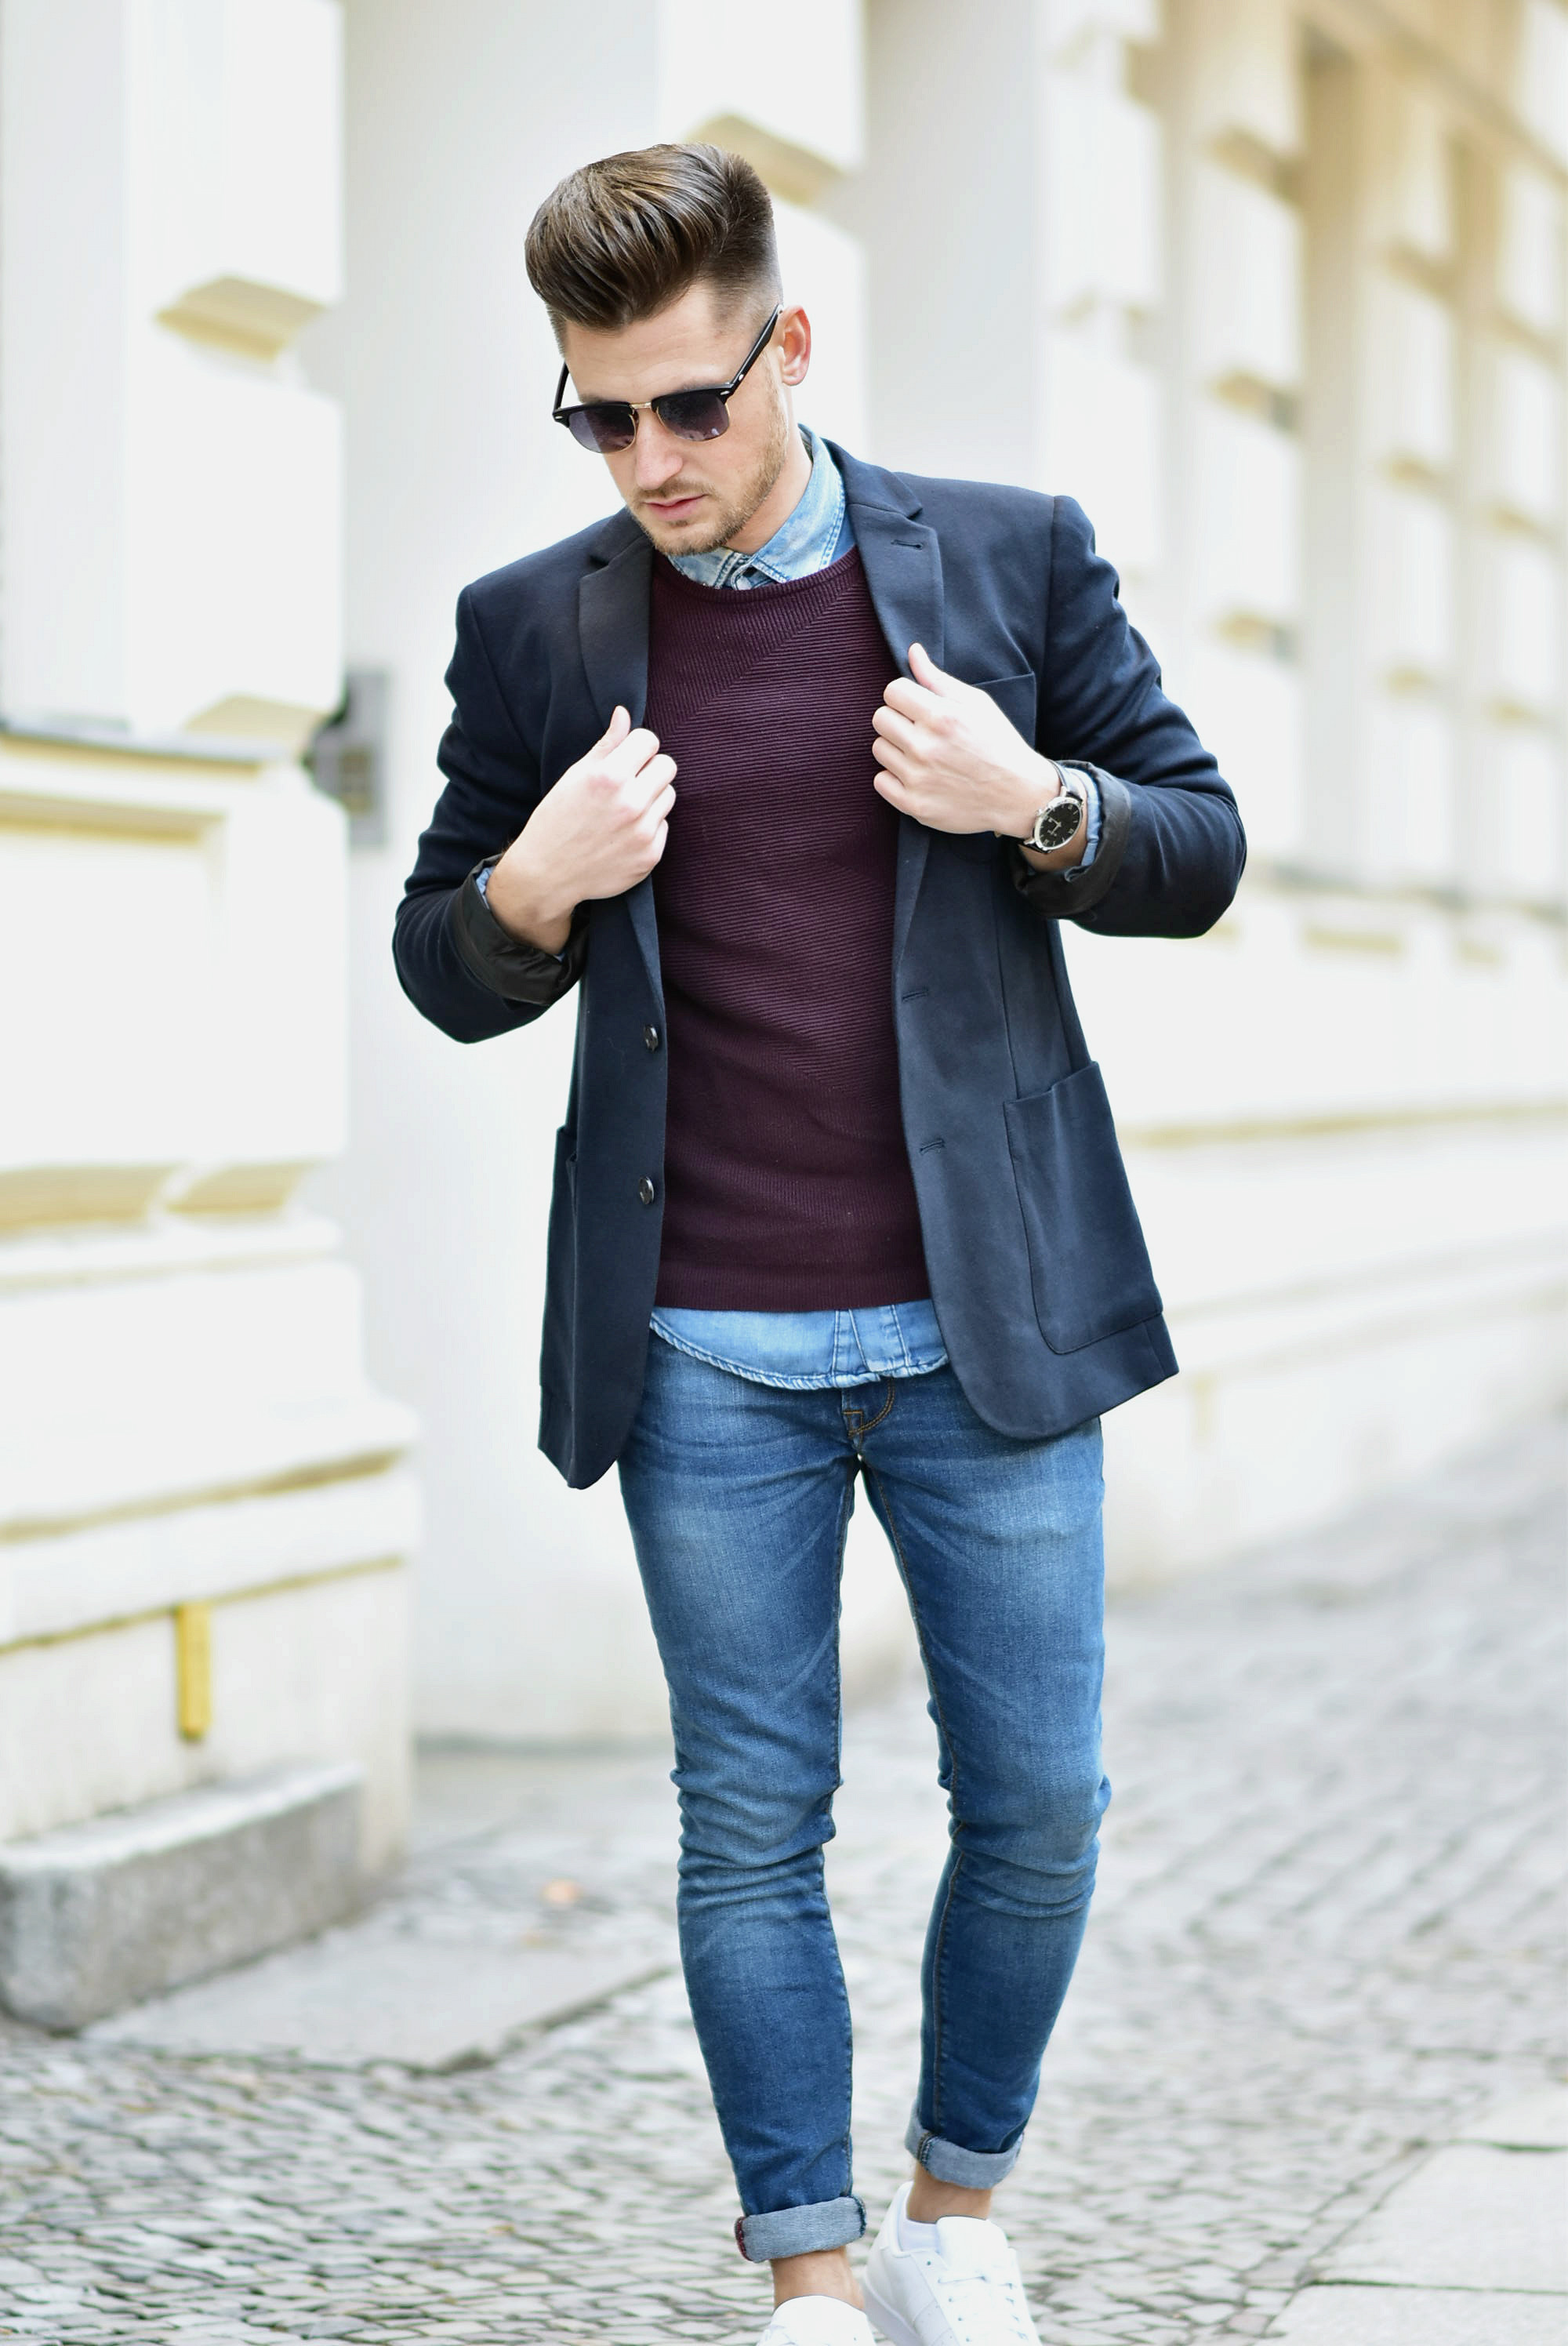 Tommeezjerry-Styleblog-Männerblog-Männer-Modeblog-Berlin-Berlinblog-Outfit-Streetlook-Skinny-Jeans-Roter-Sweater-Sonnenbrille-Jeanshemd-Adidas-Superstar-Blazer-Smart-Look-Denim-Look